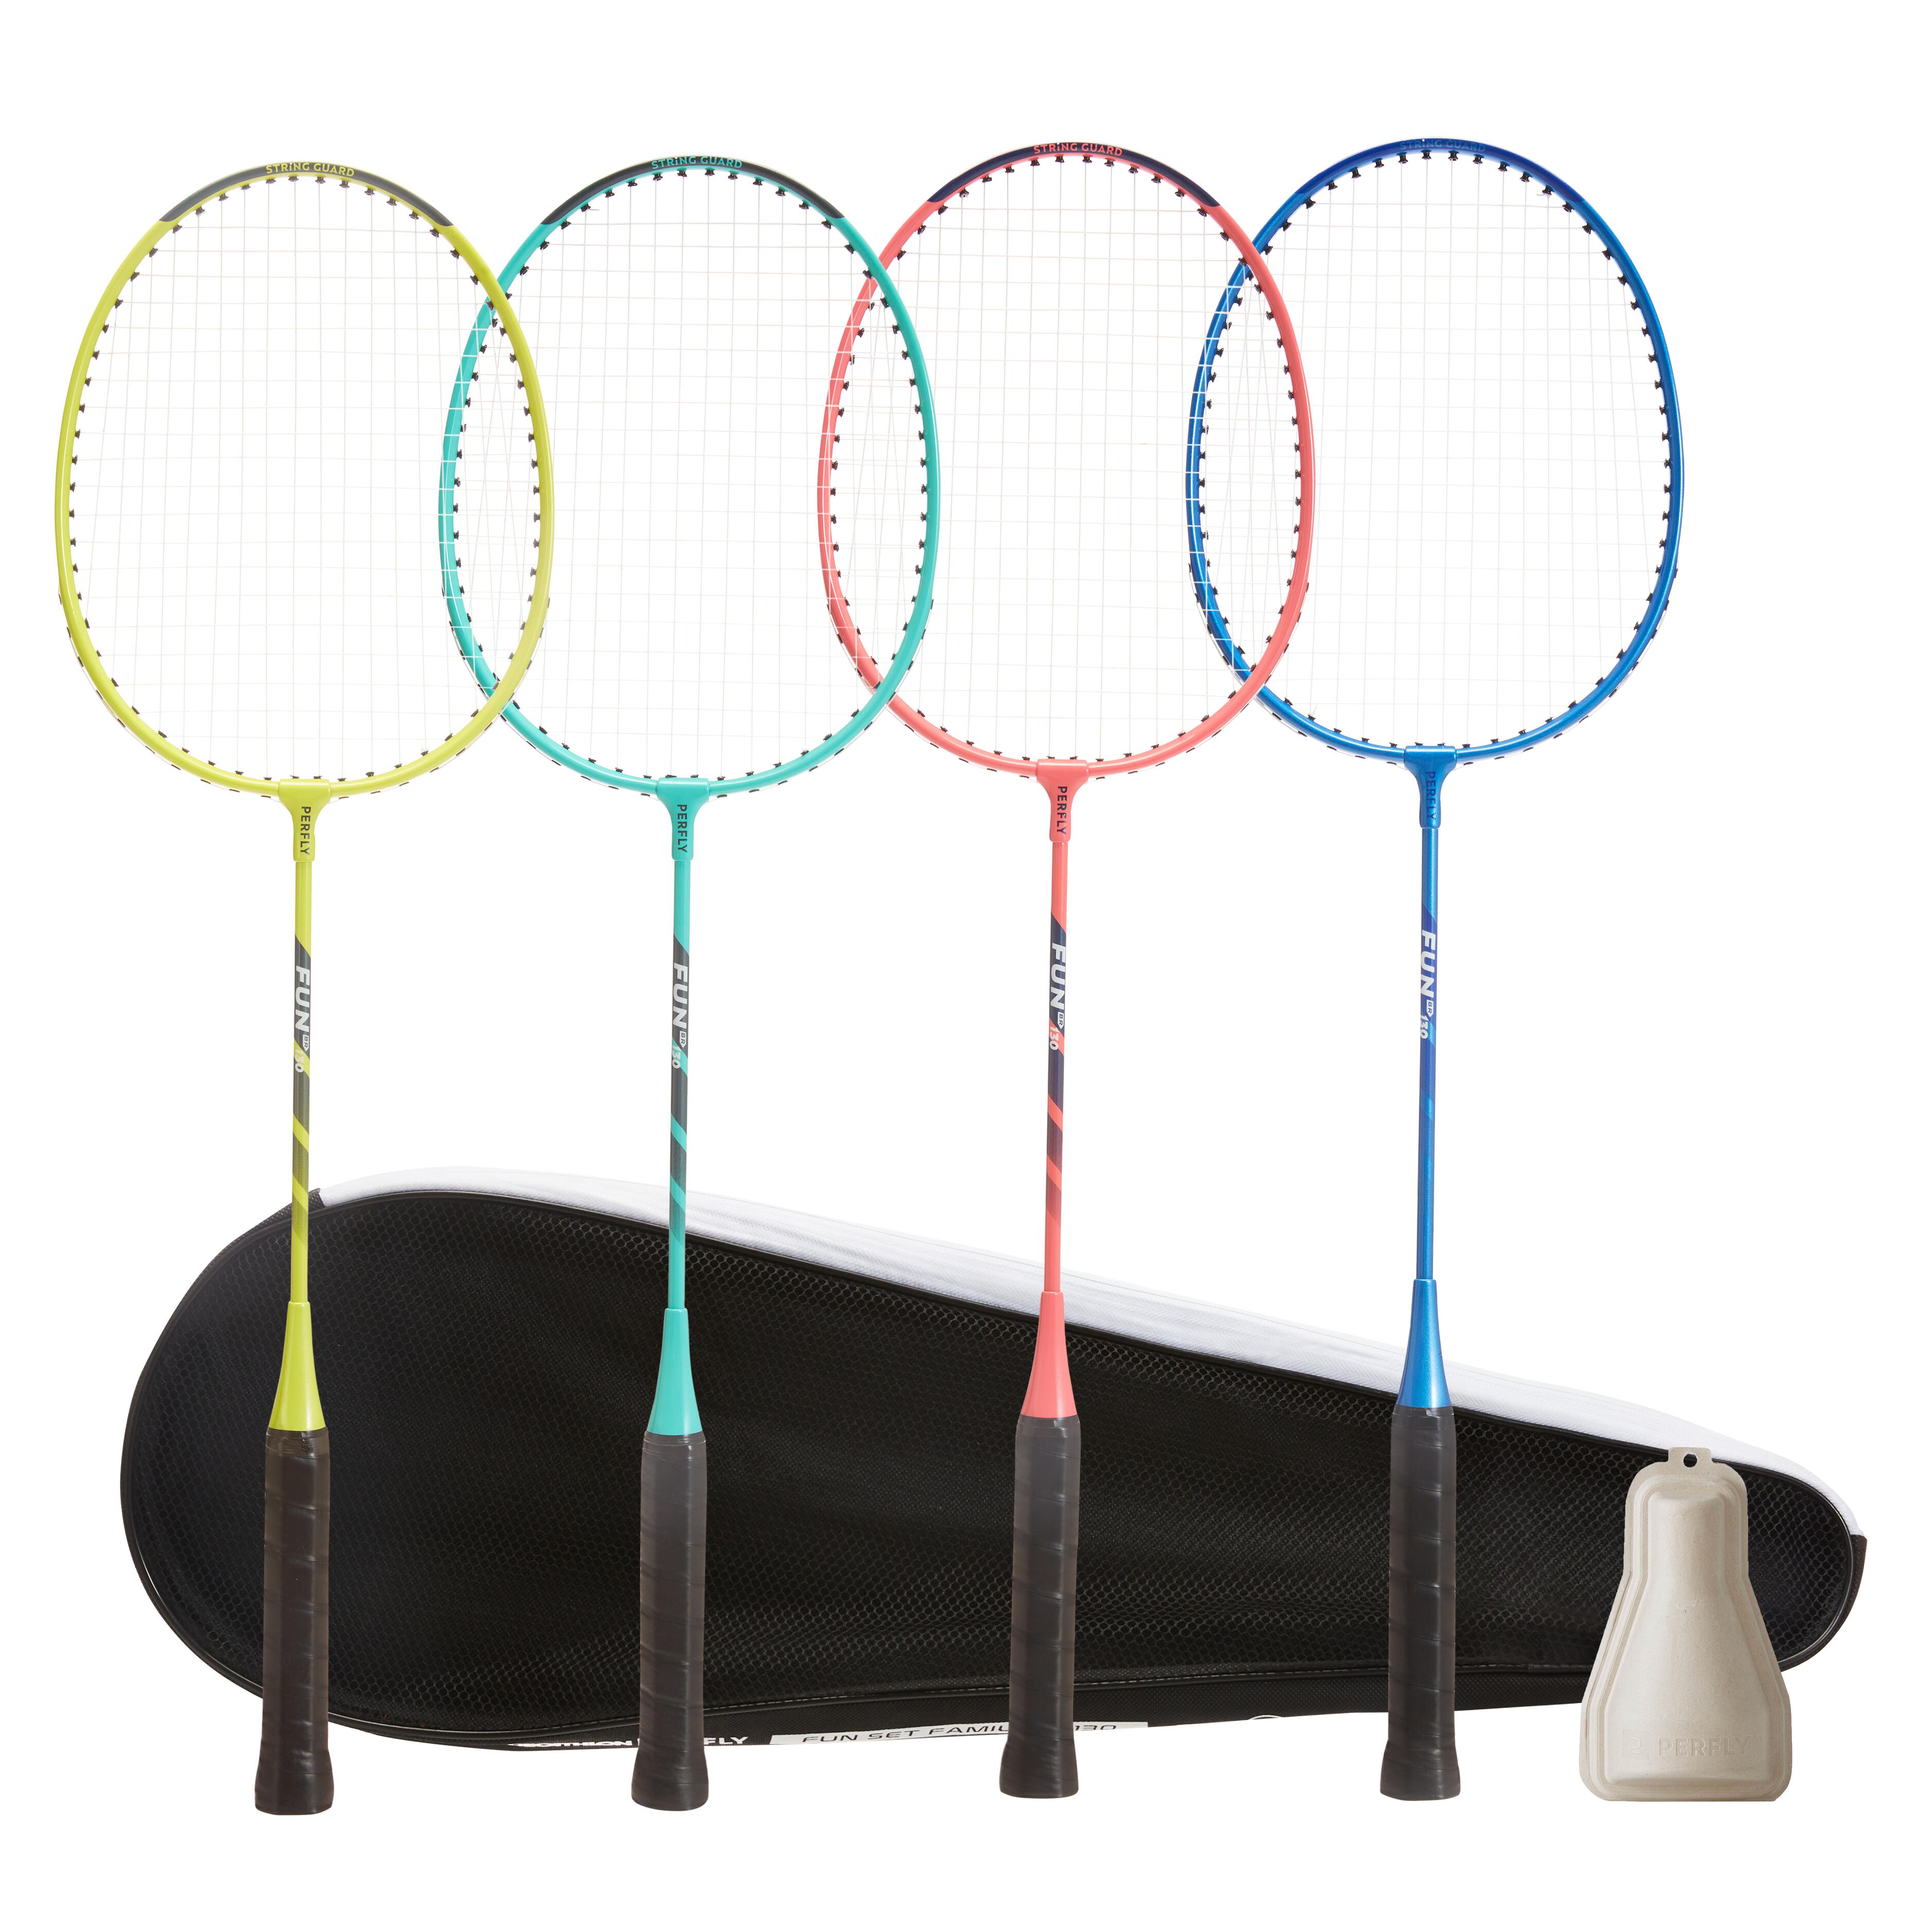 Family Set of 4 Badminton Rackets - Fun BR 130